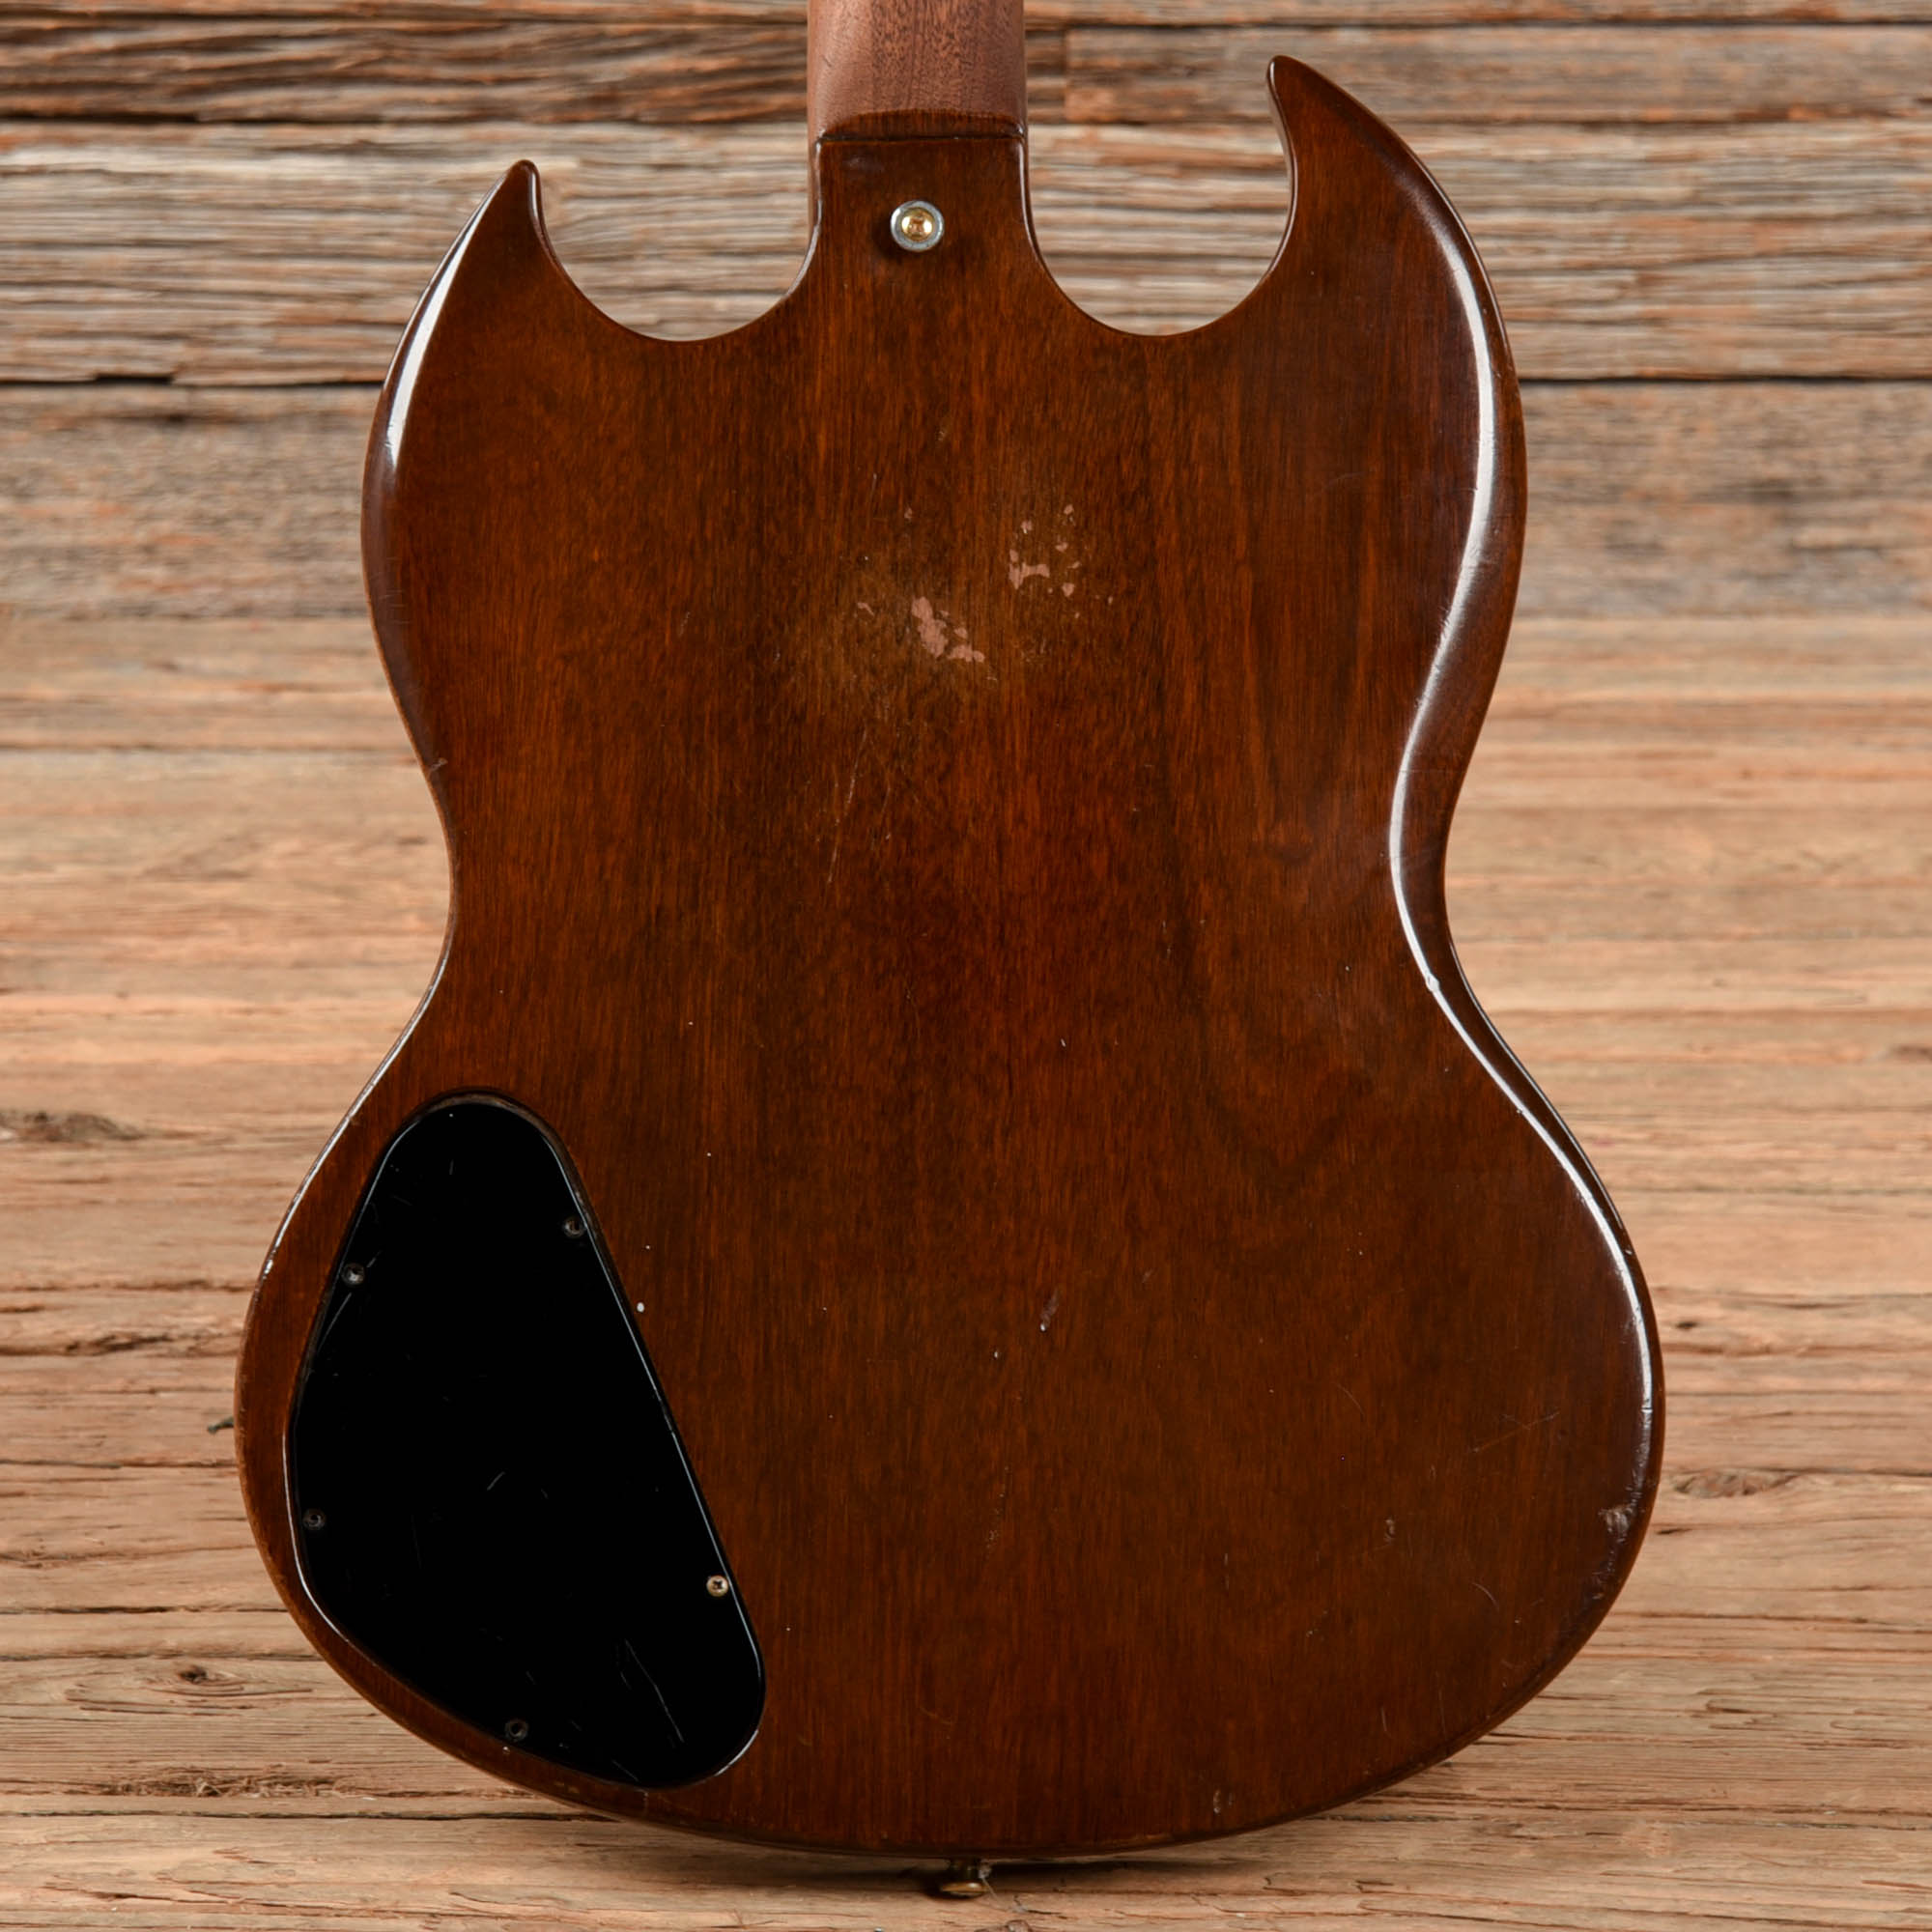 Gibson SG Custom Walnut 1973